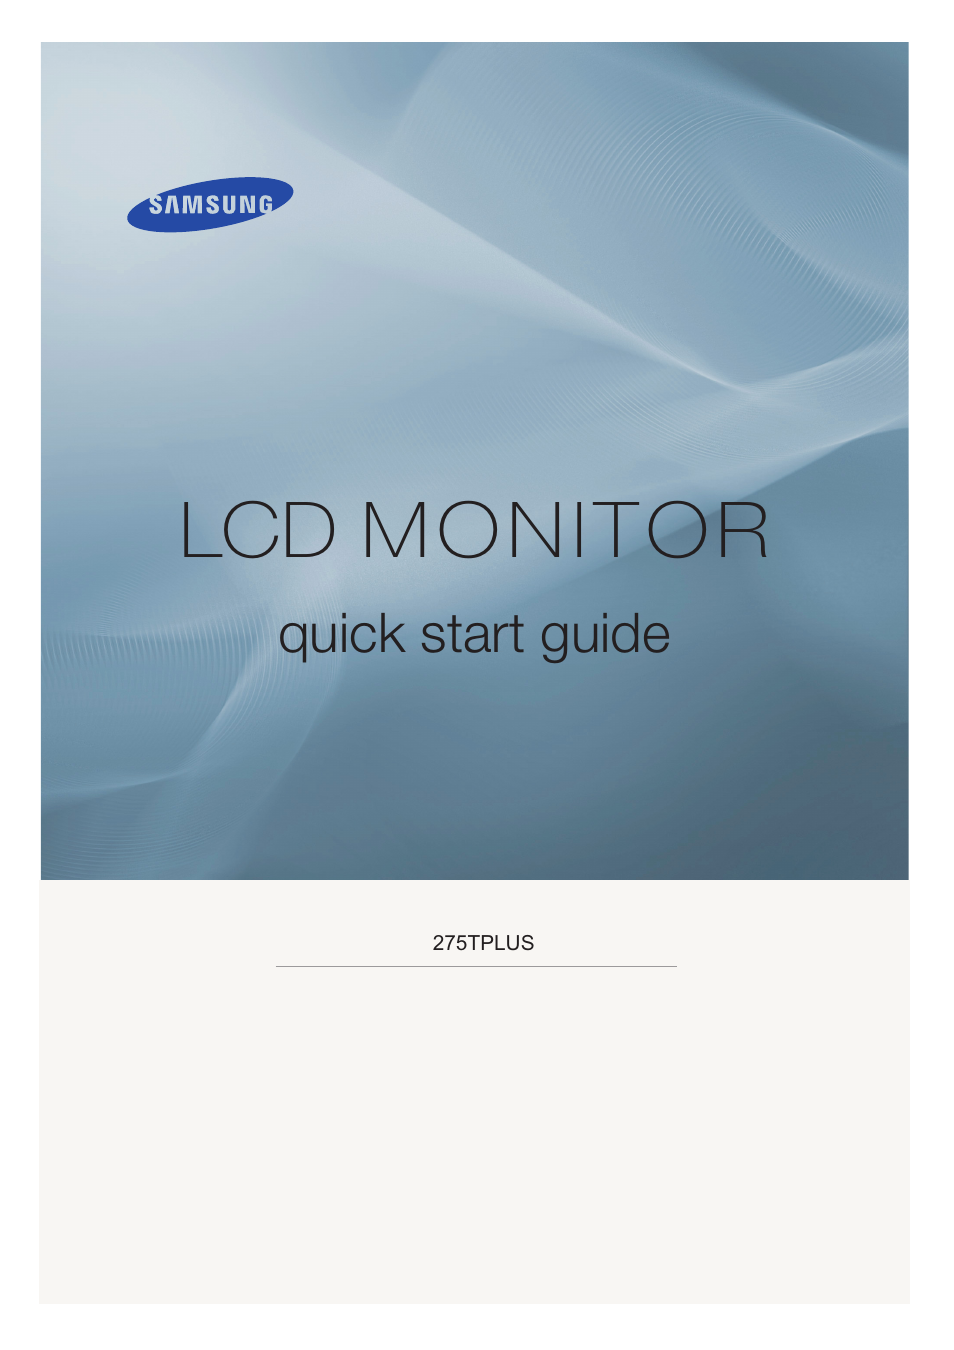 Samsung LCD MONITOR 275TPLUS Manual del usuario | Páginas: 20